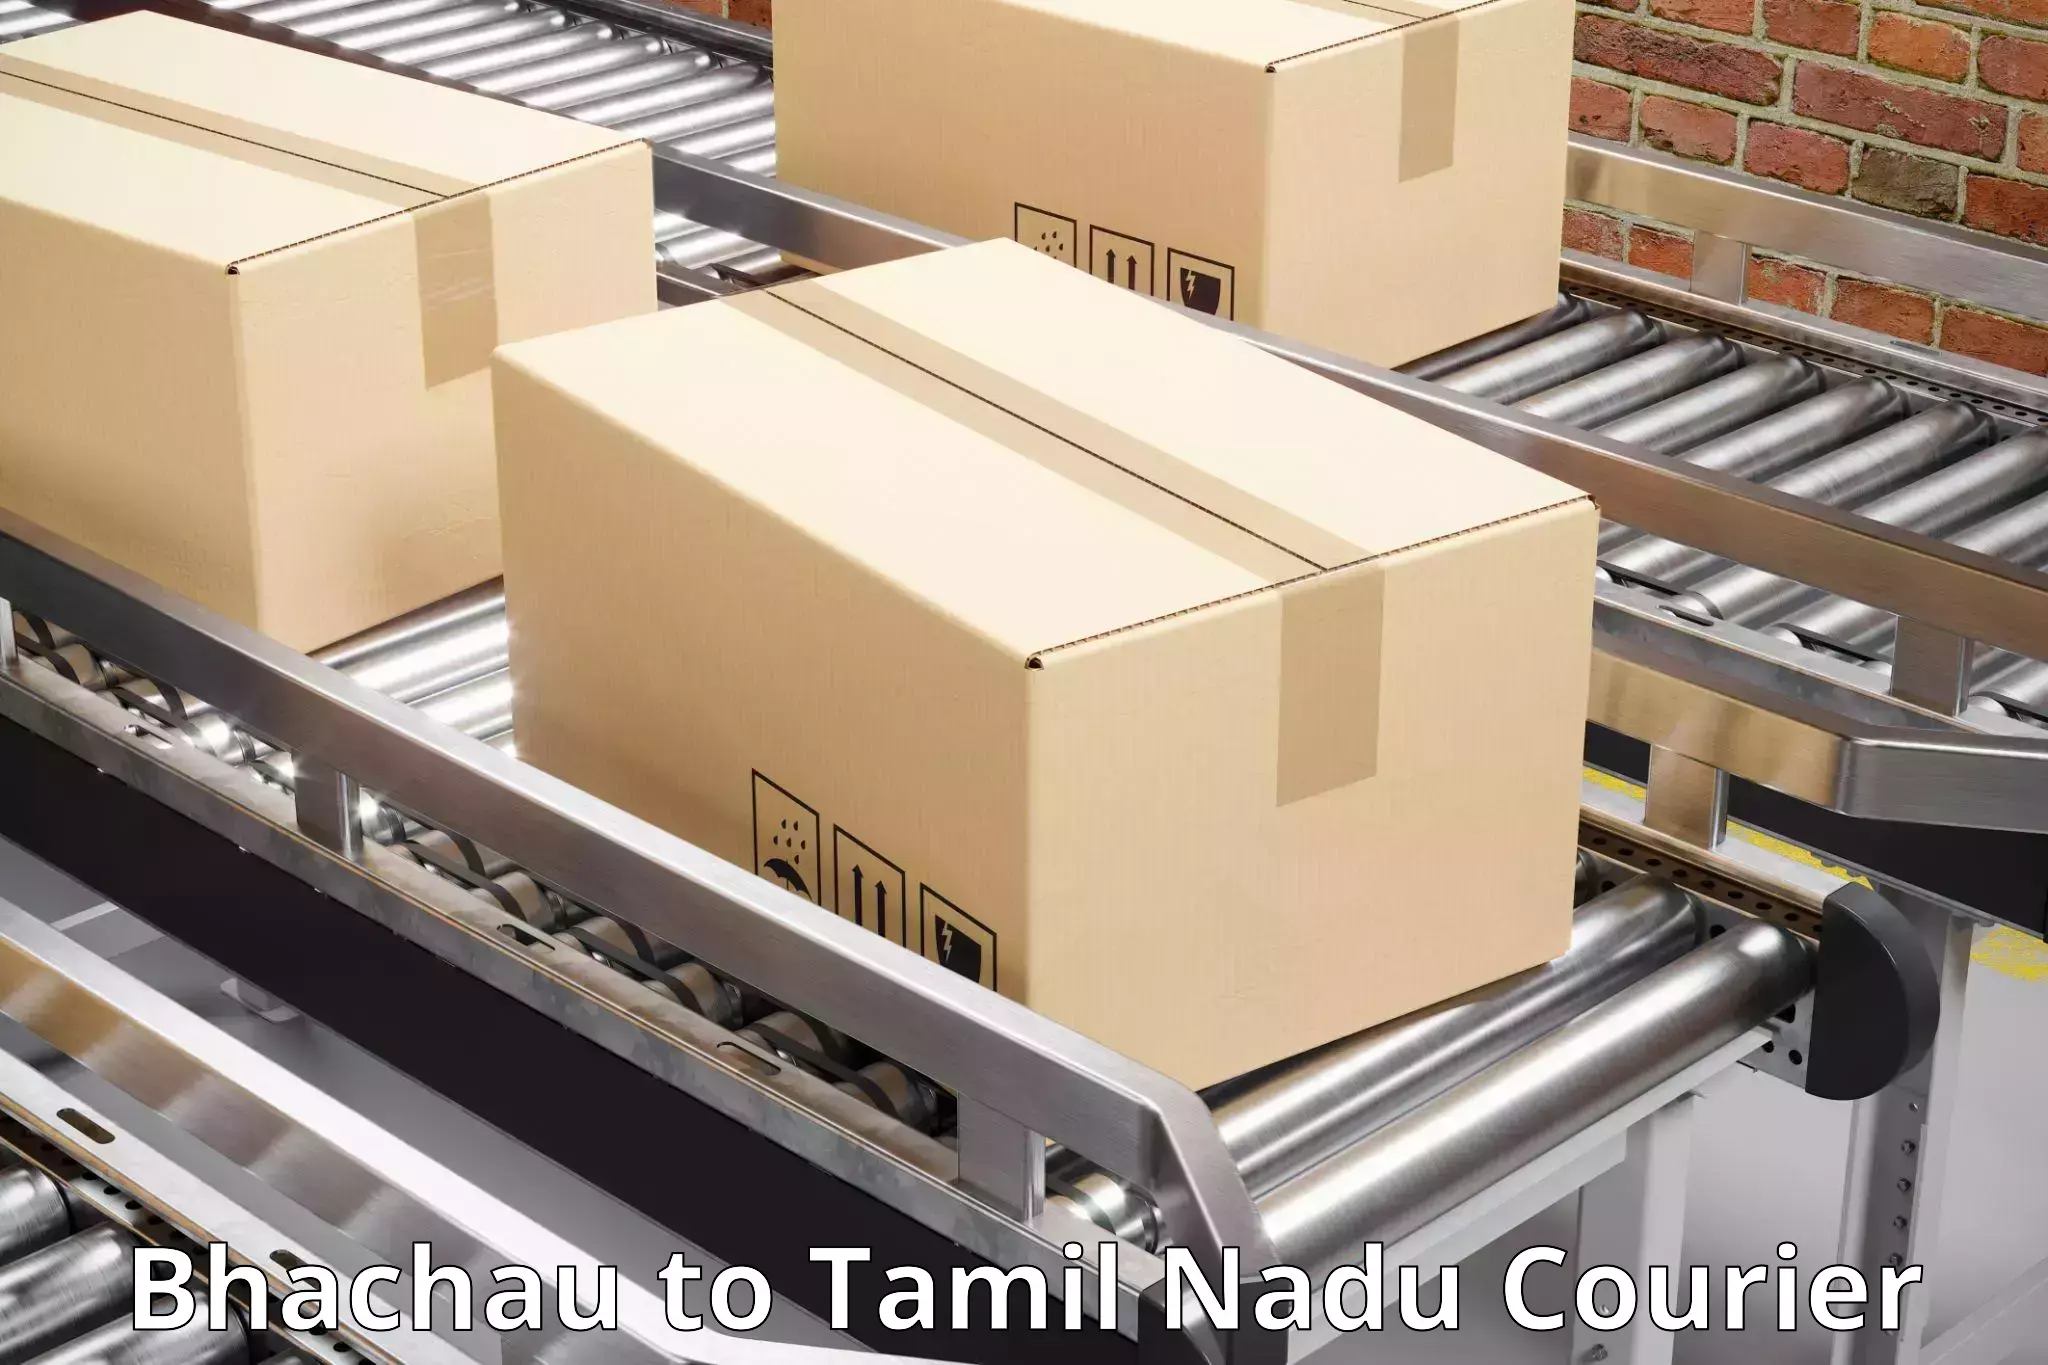 Cargo delivery service Bhachau to Chennai Port